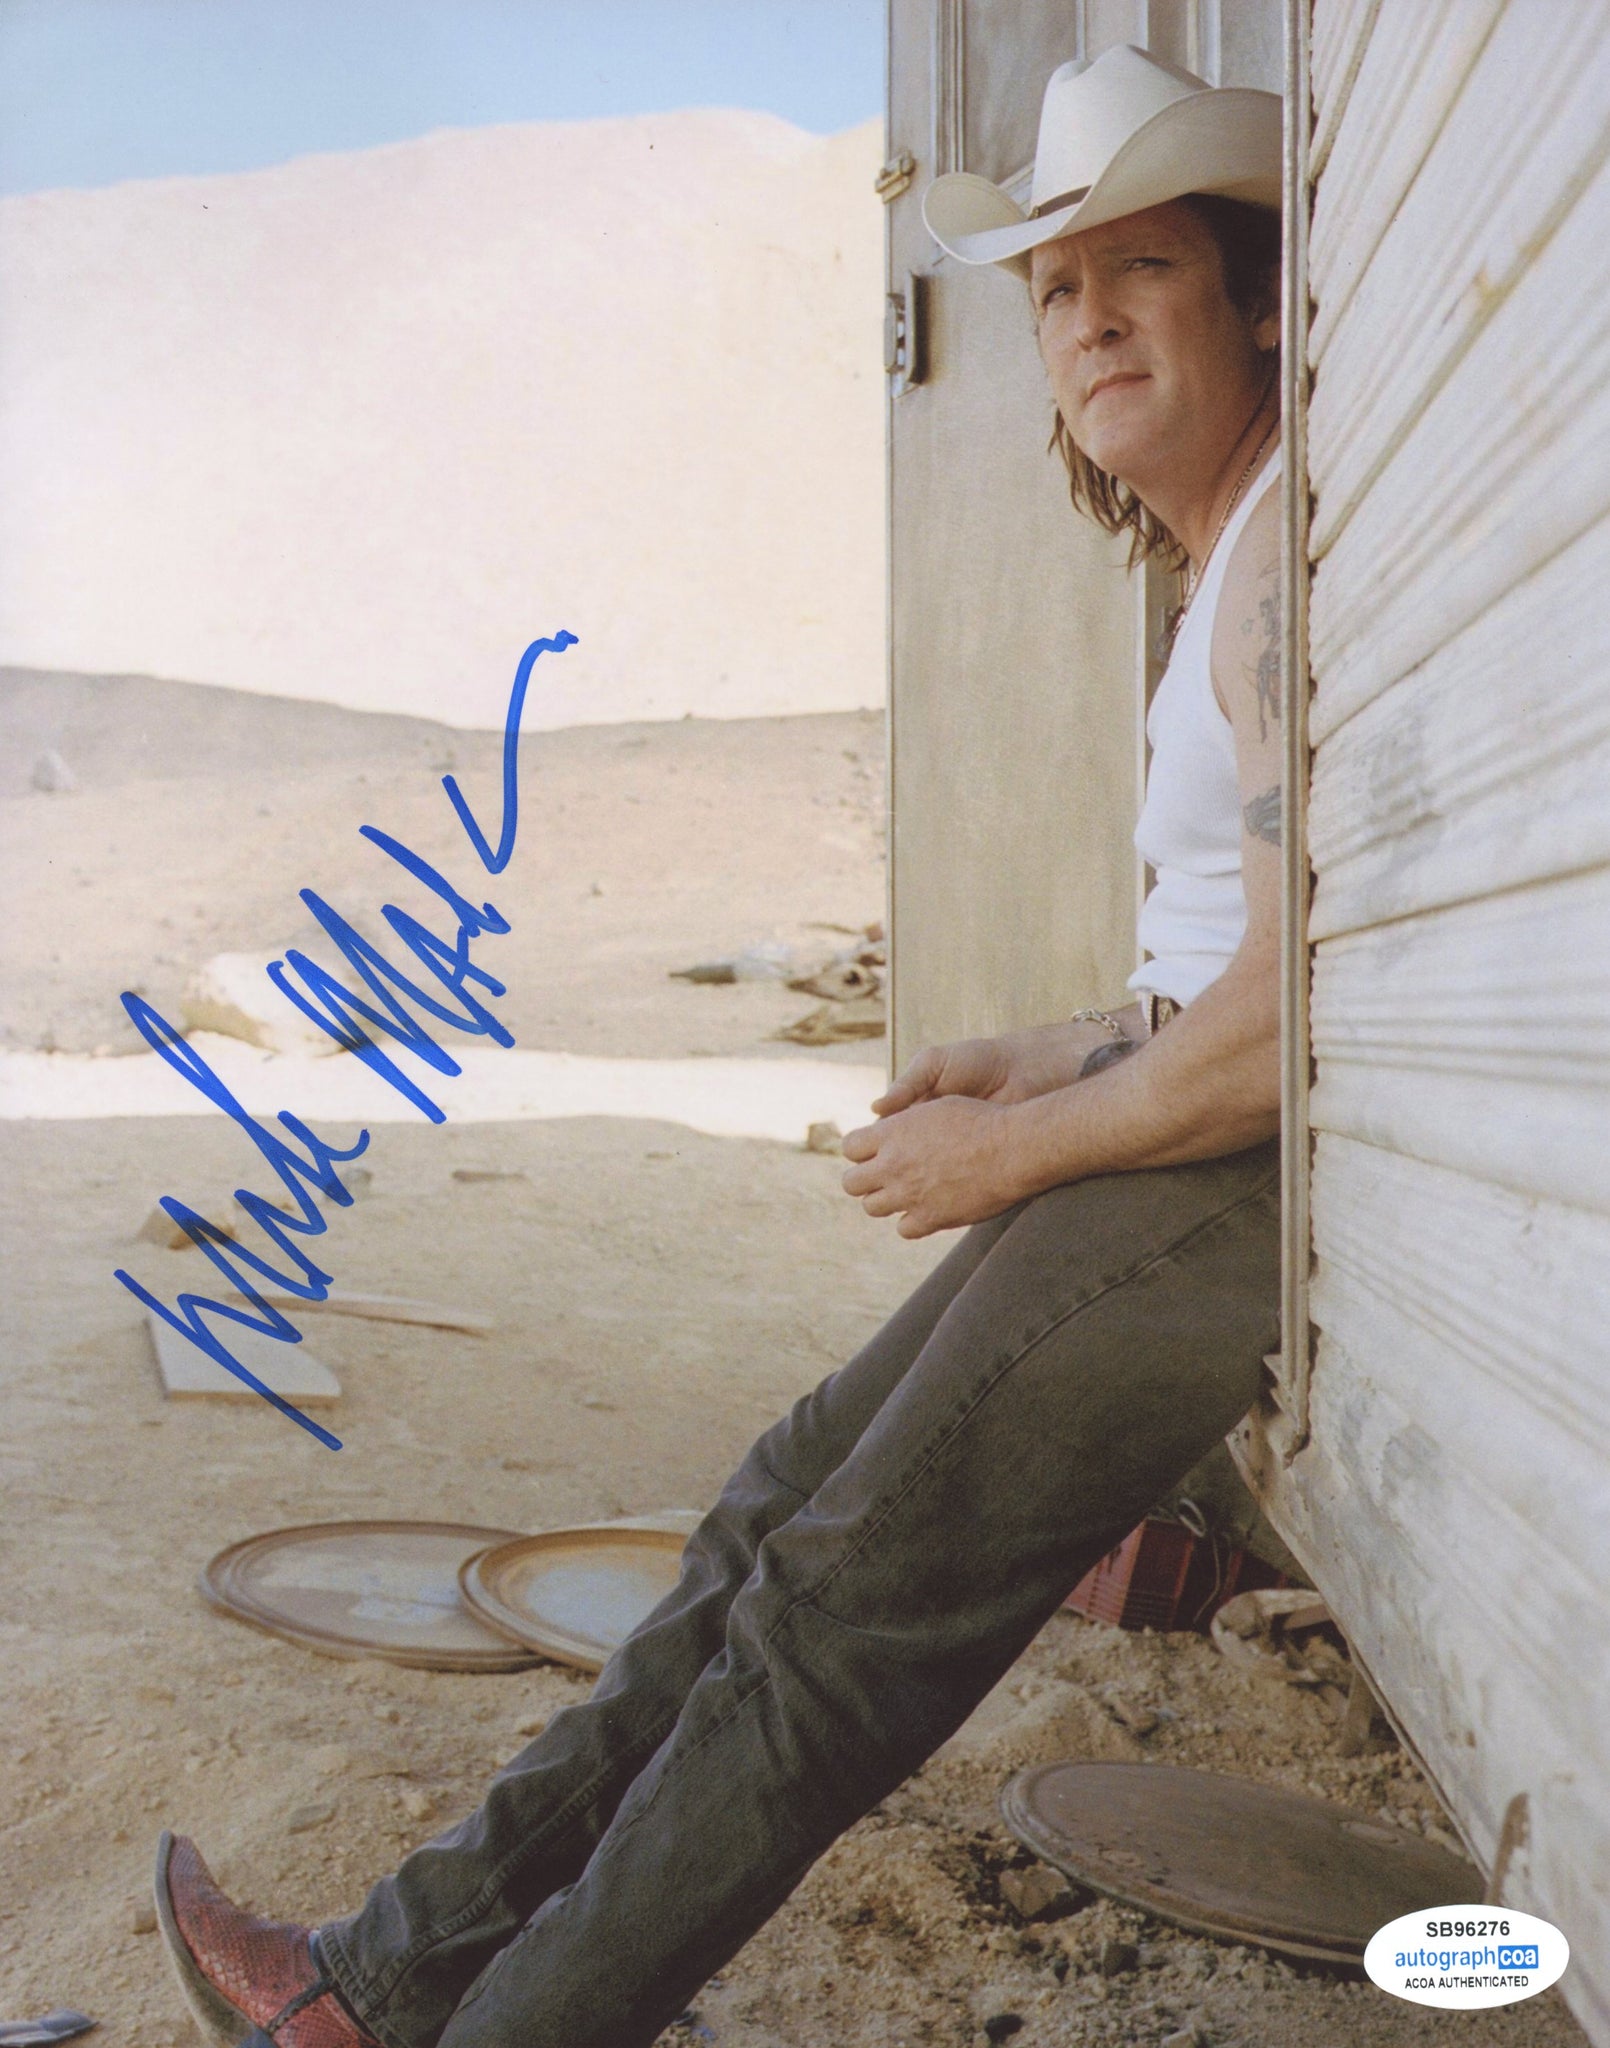 Michael Madsen Kill Bill Signed Autograph 8x10 Photo ACOA